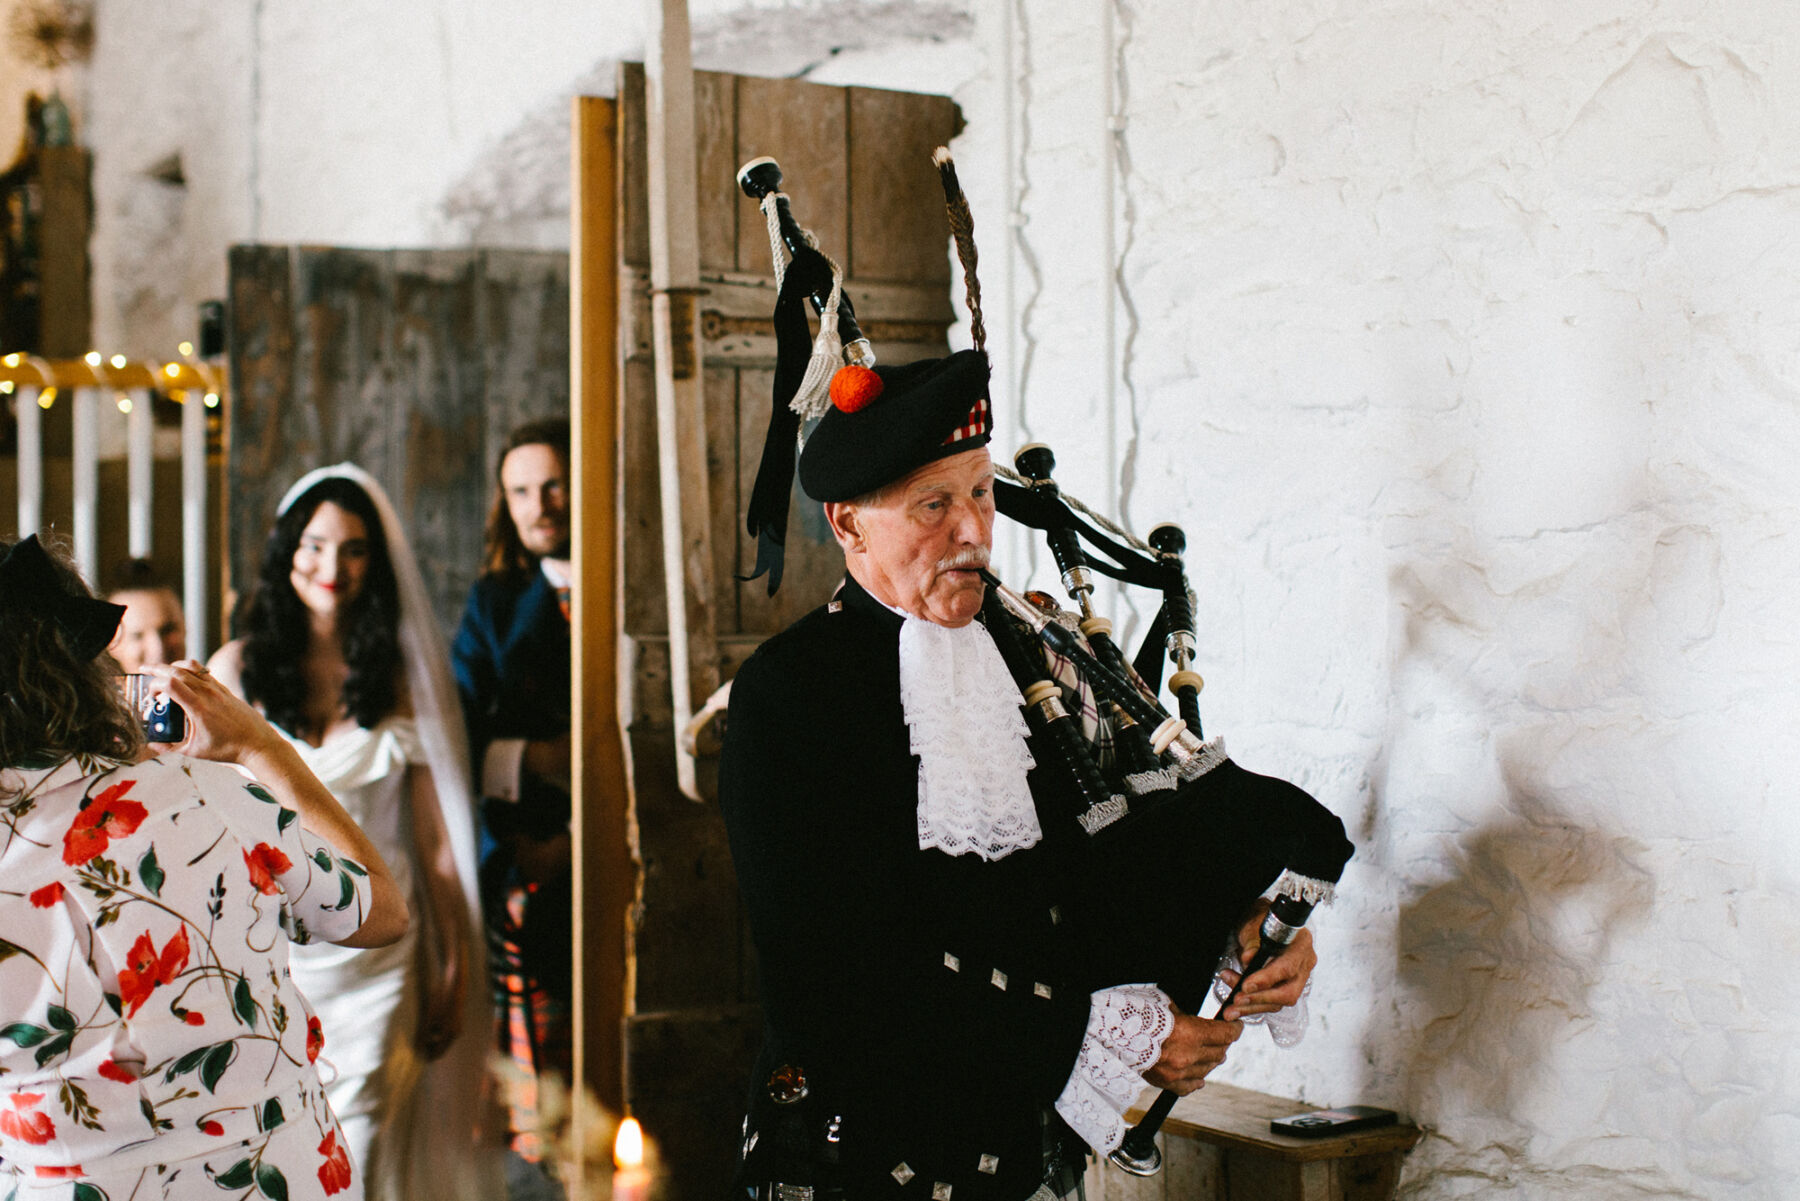 Scottish piper at a wedding.